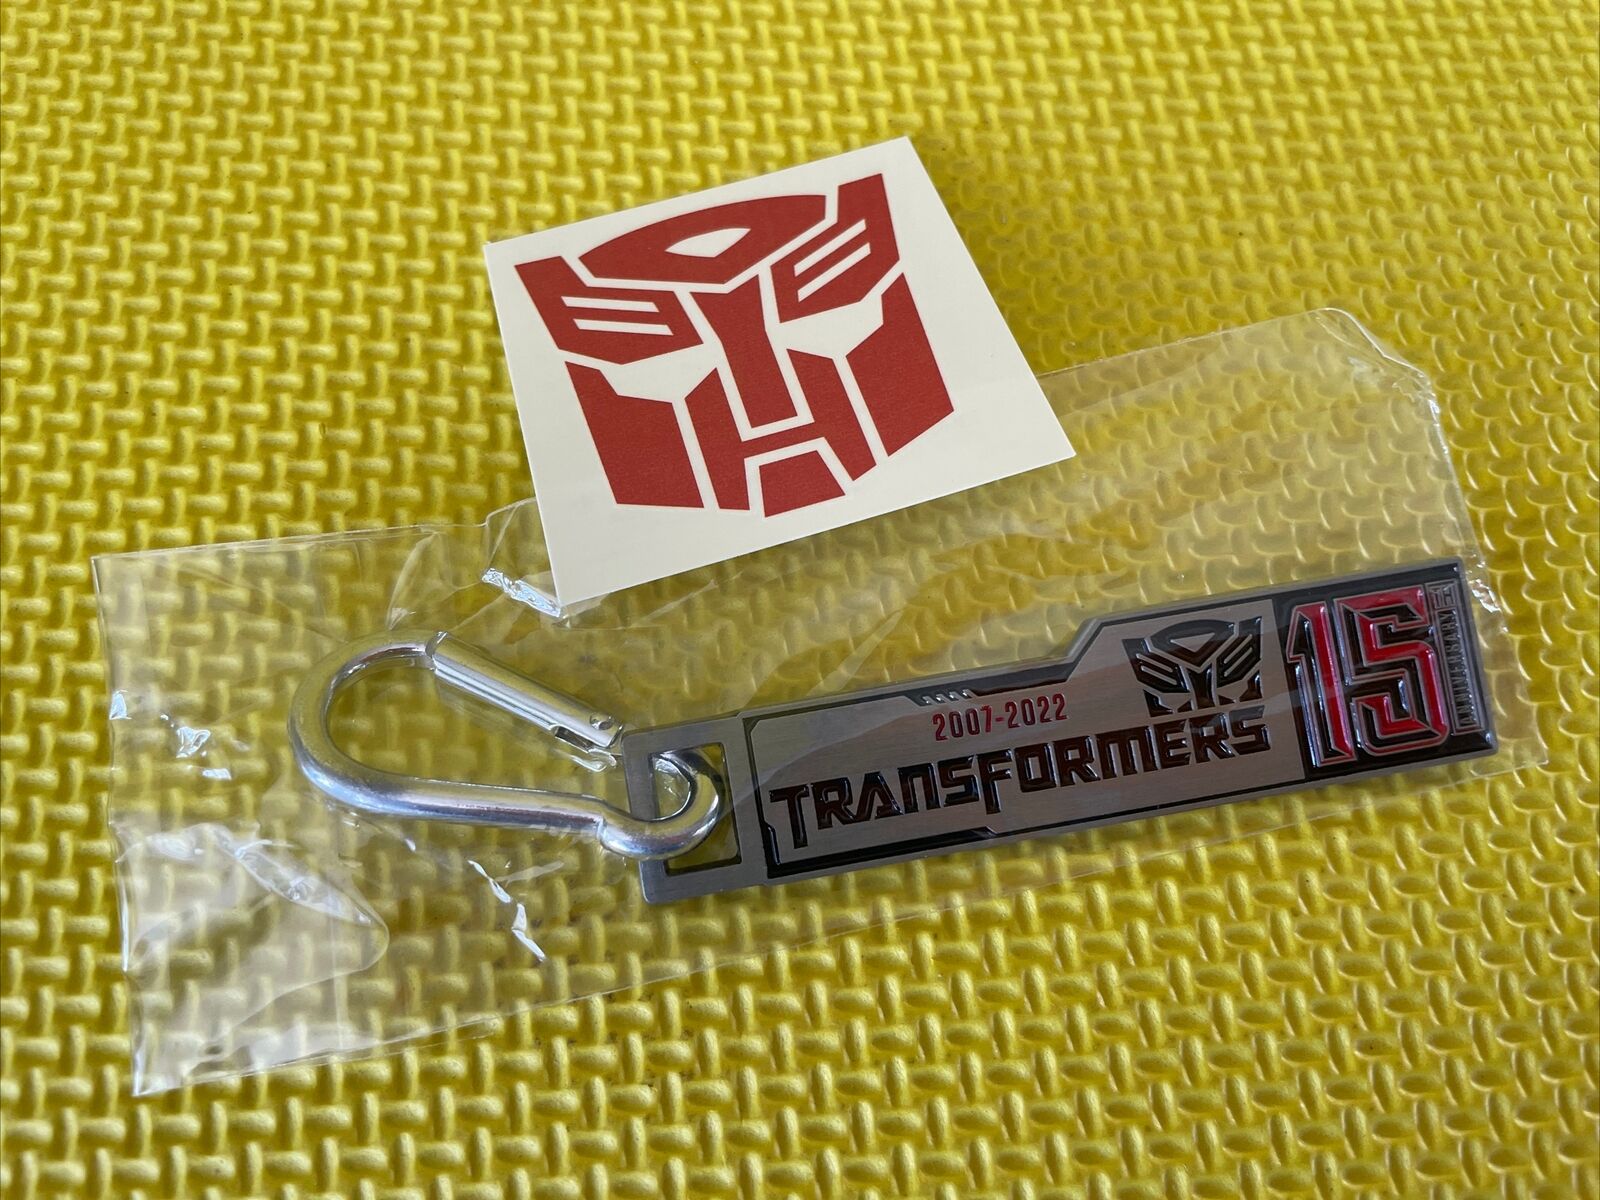 Sdcc 2022 - Transformers Keychain & Sticker - Exclusive Hasbro Comic Con 15th